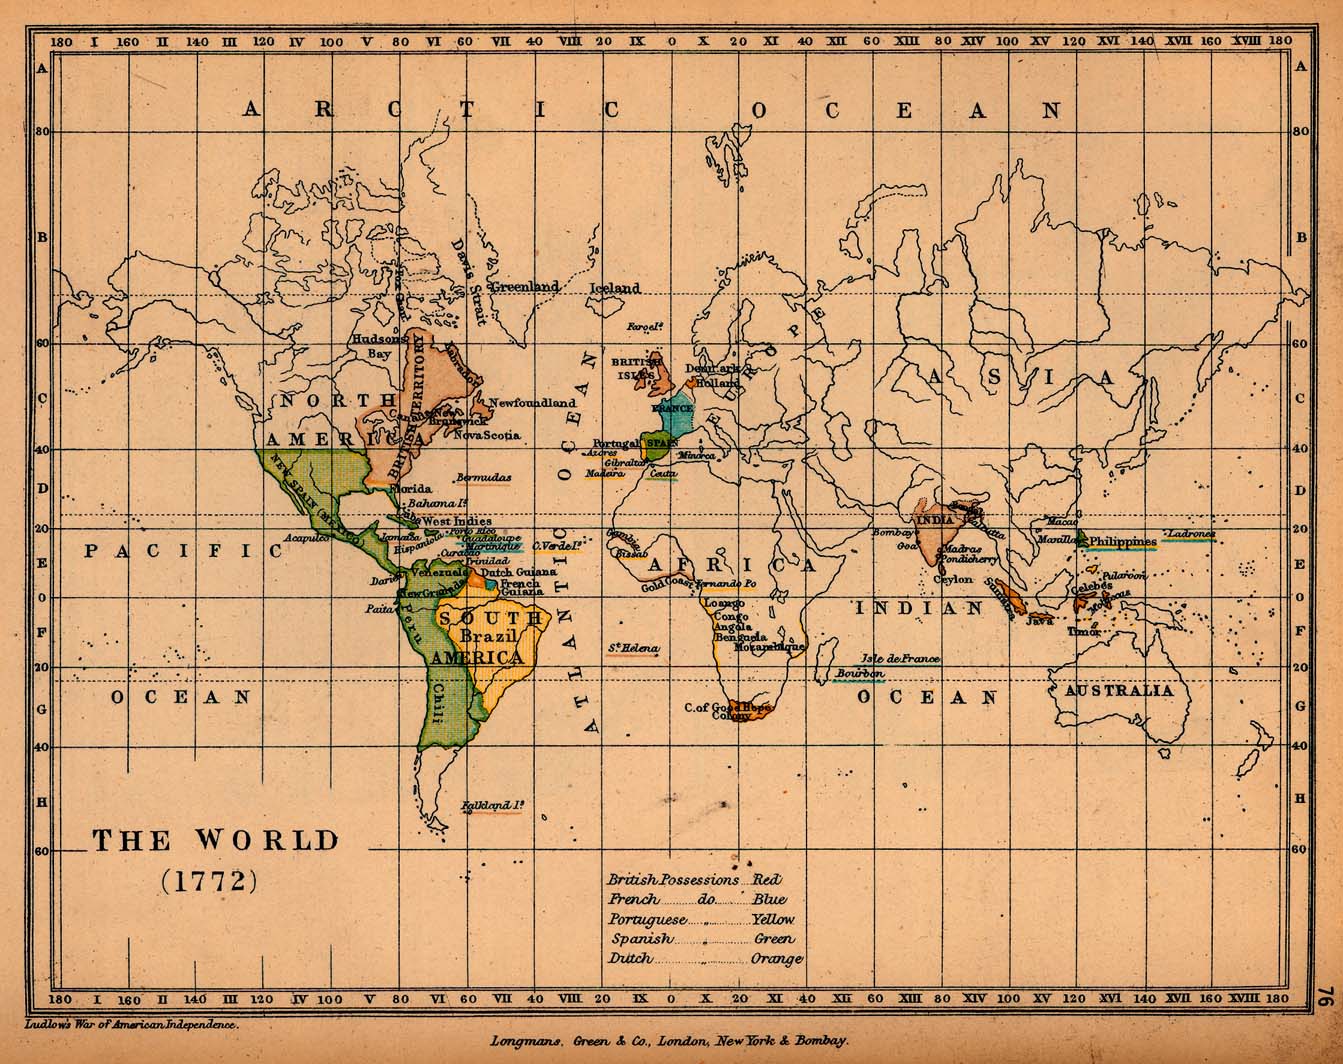 World Map In Spanish